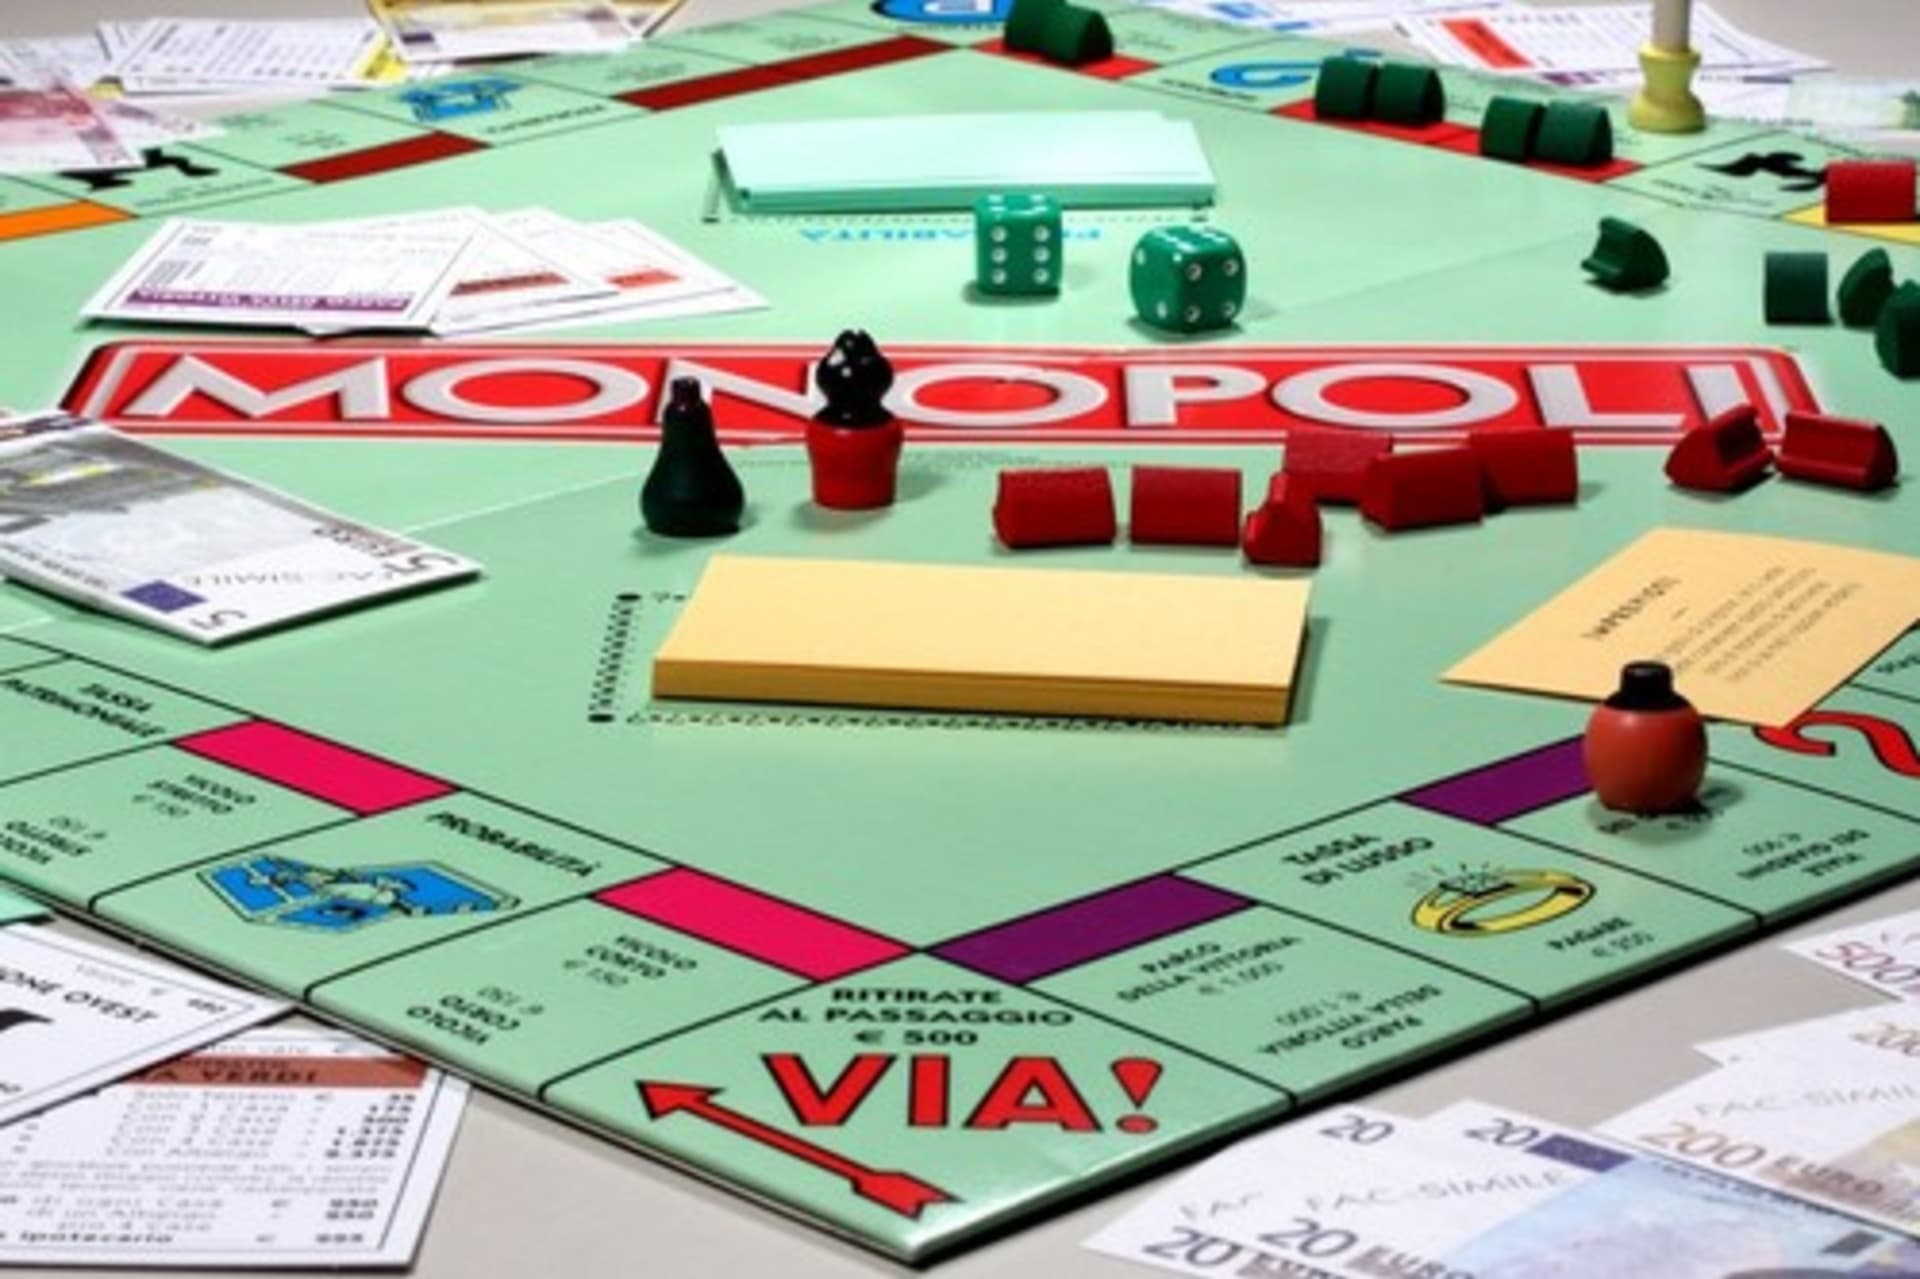 Deskovka Monopoly